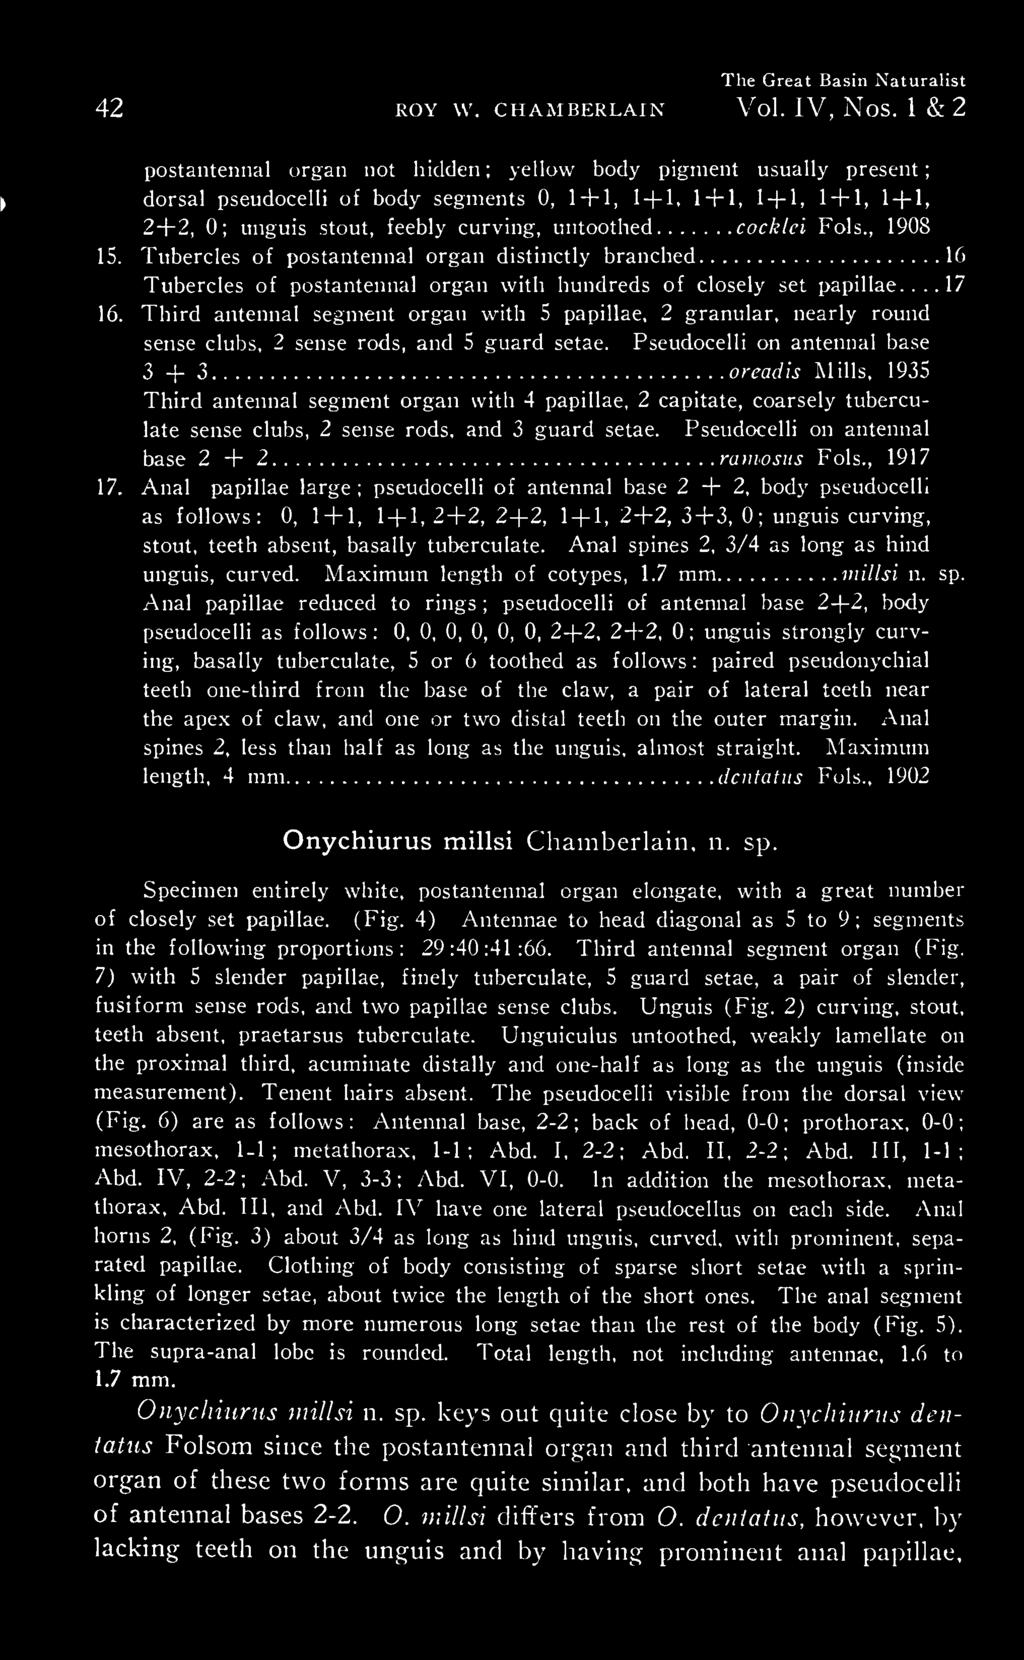 Fols., 1908 15. Tubercles of postantennal organ distinctly branched 16 Tubercles of postantennal organ with hundreds of closely set papillae...!/ 16.